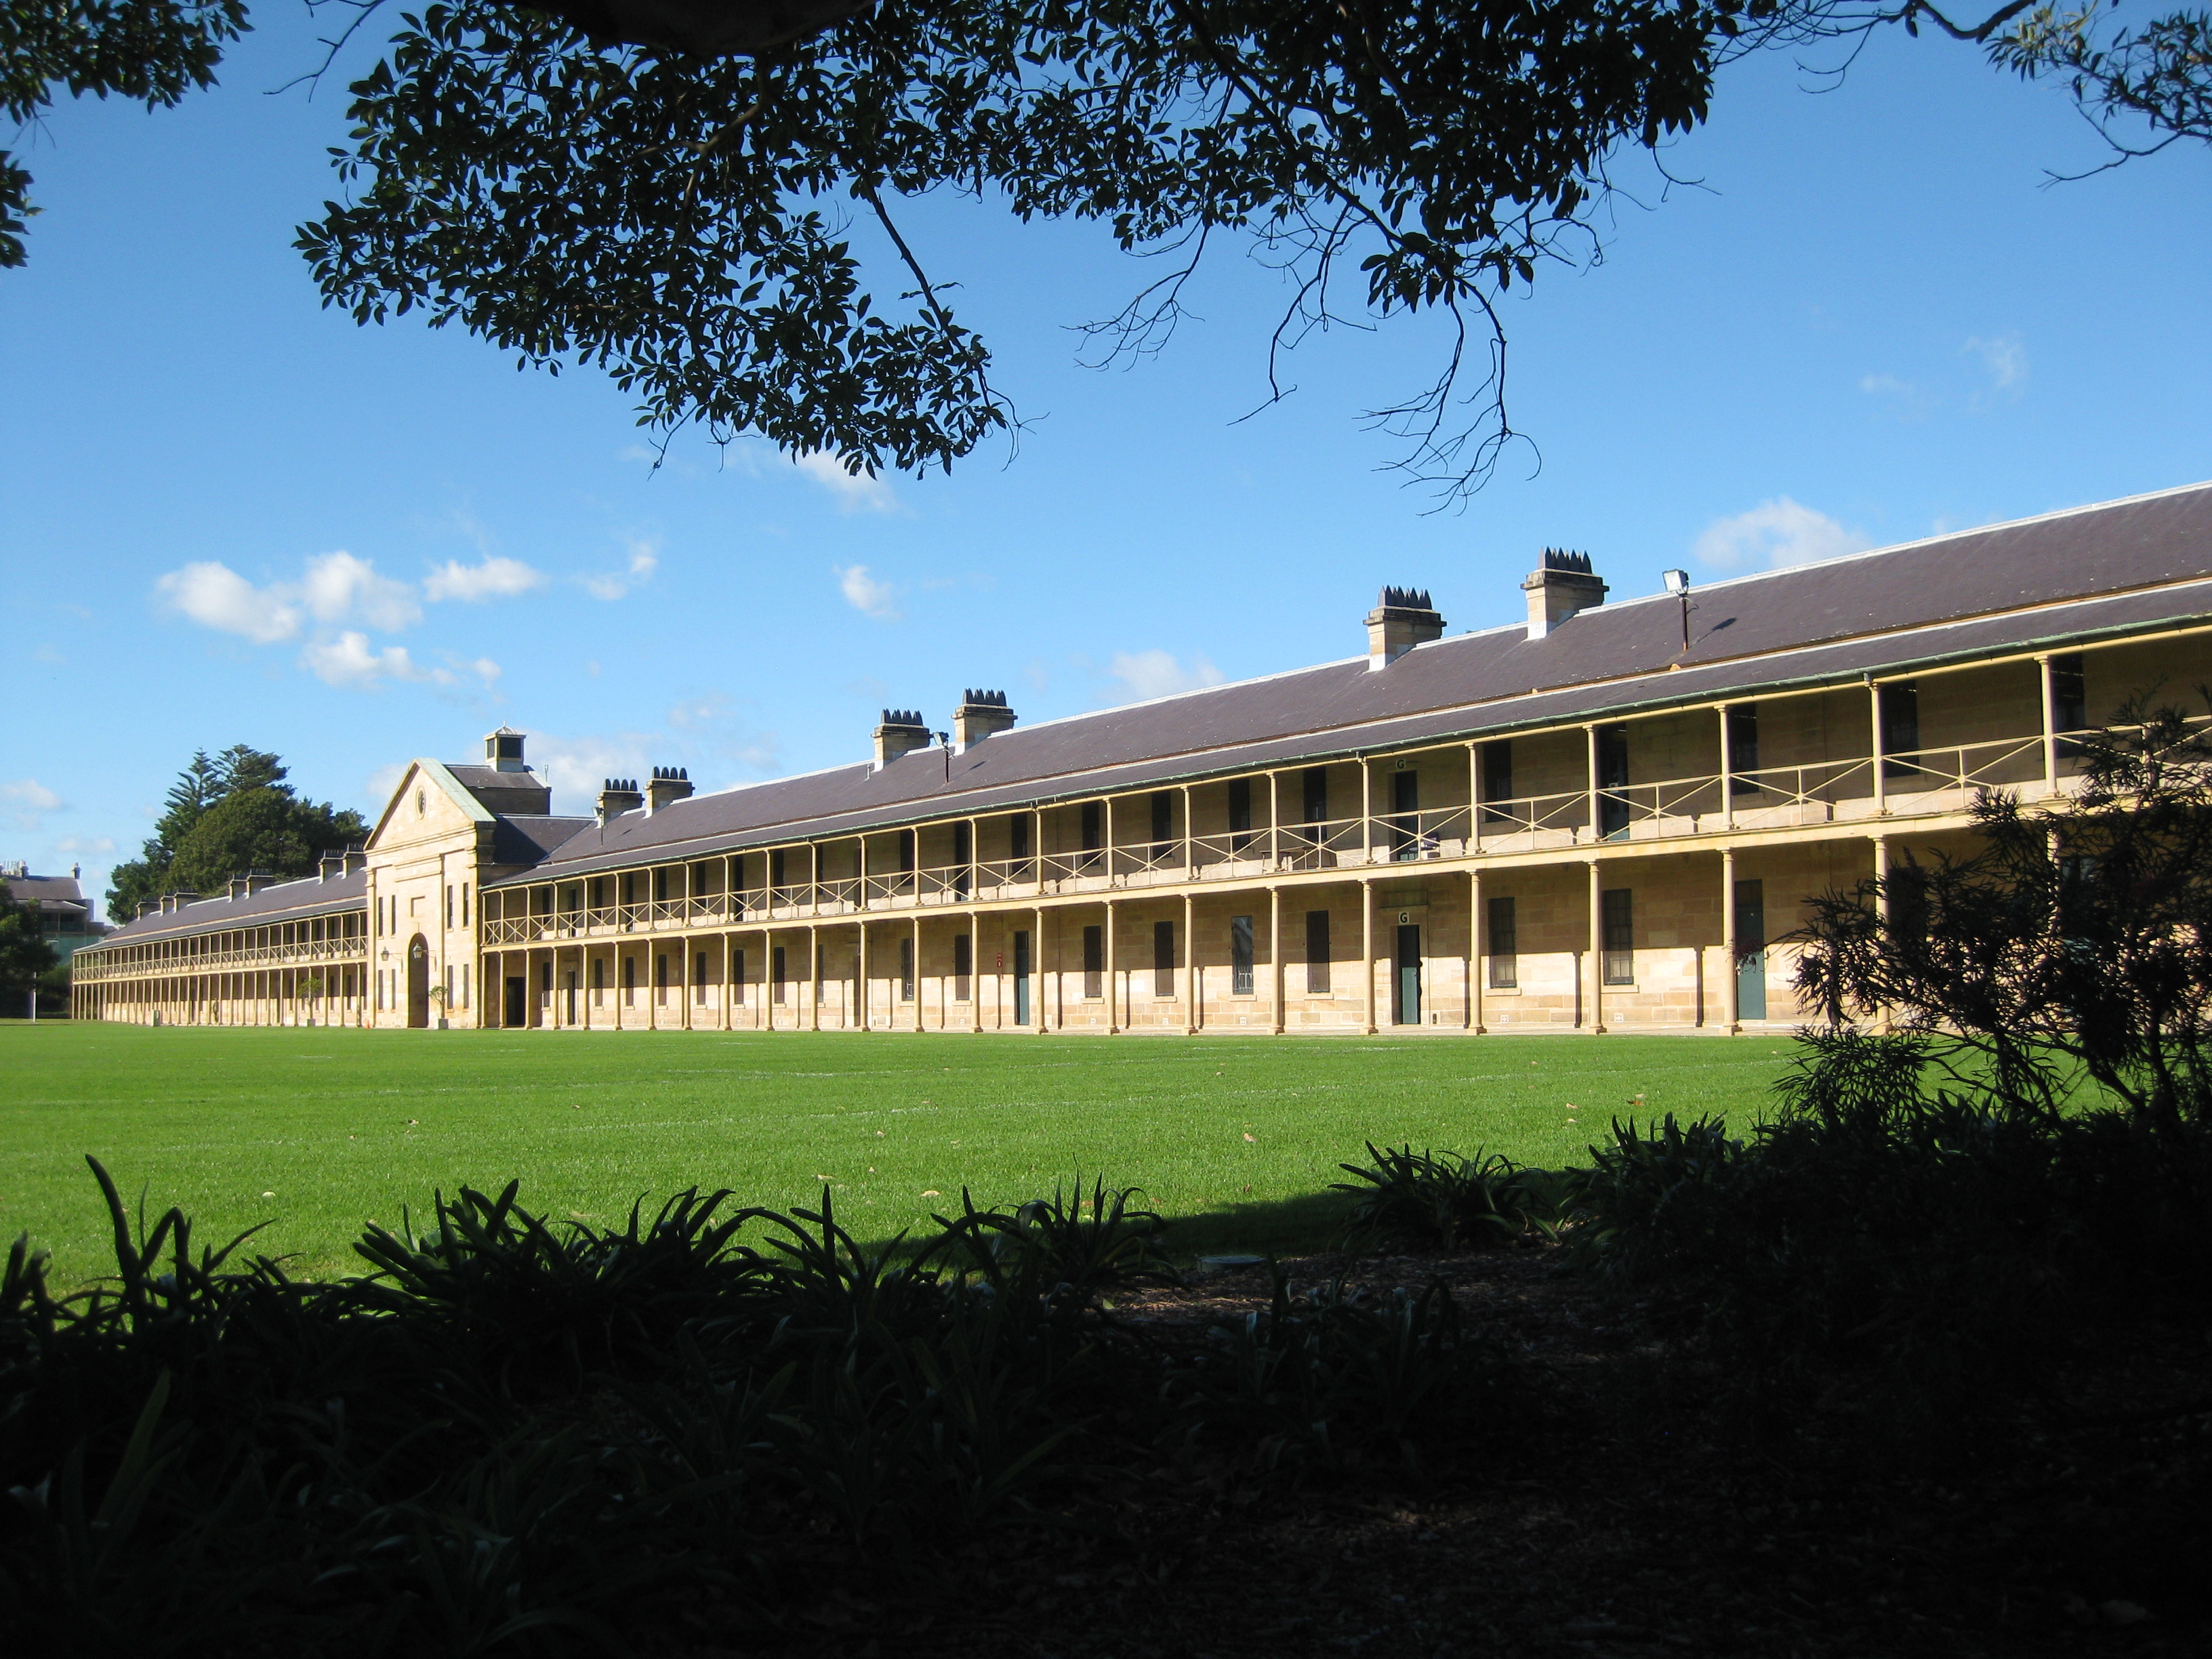 The Historic Victoria Barracks in Paddington, Sydney